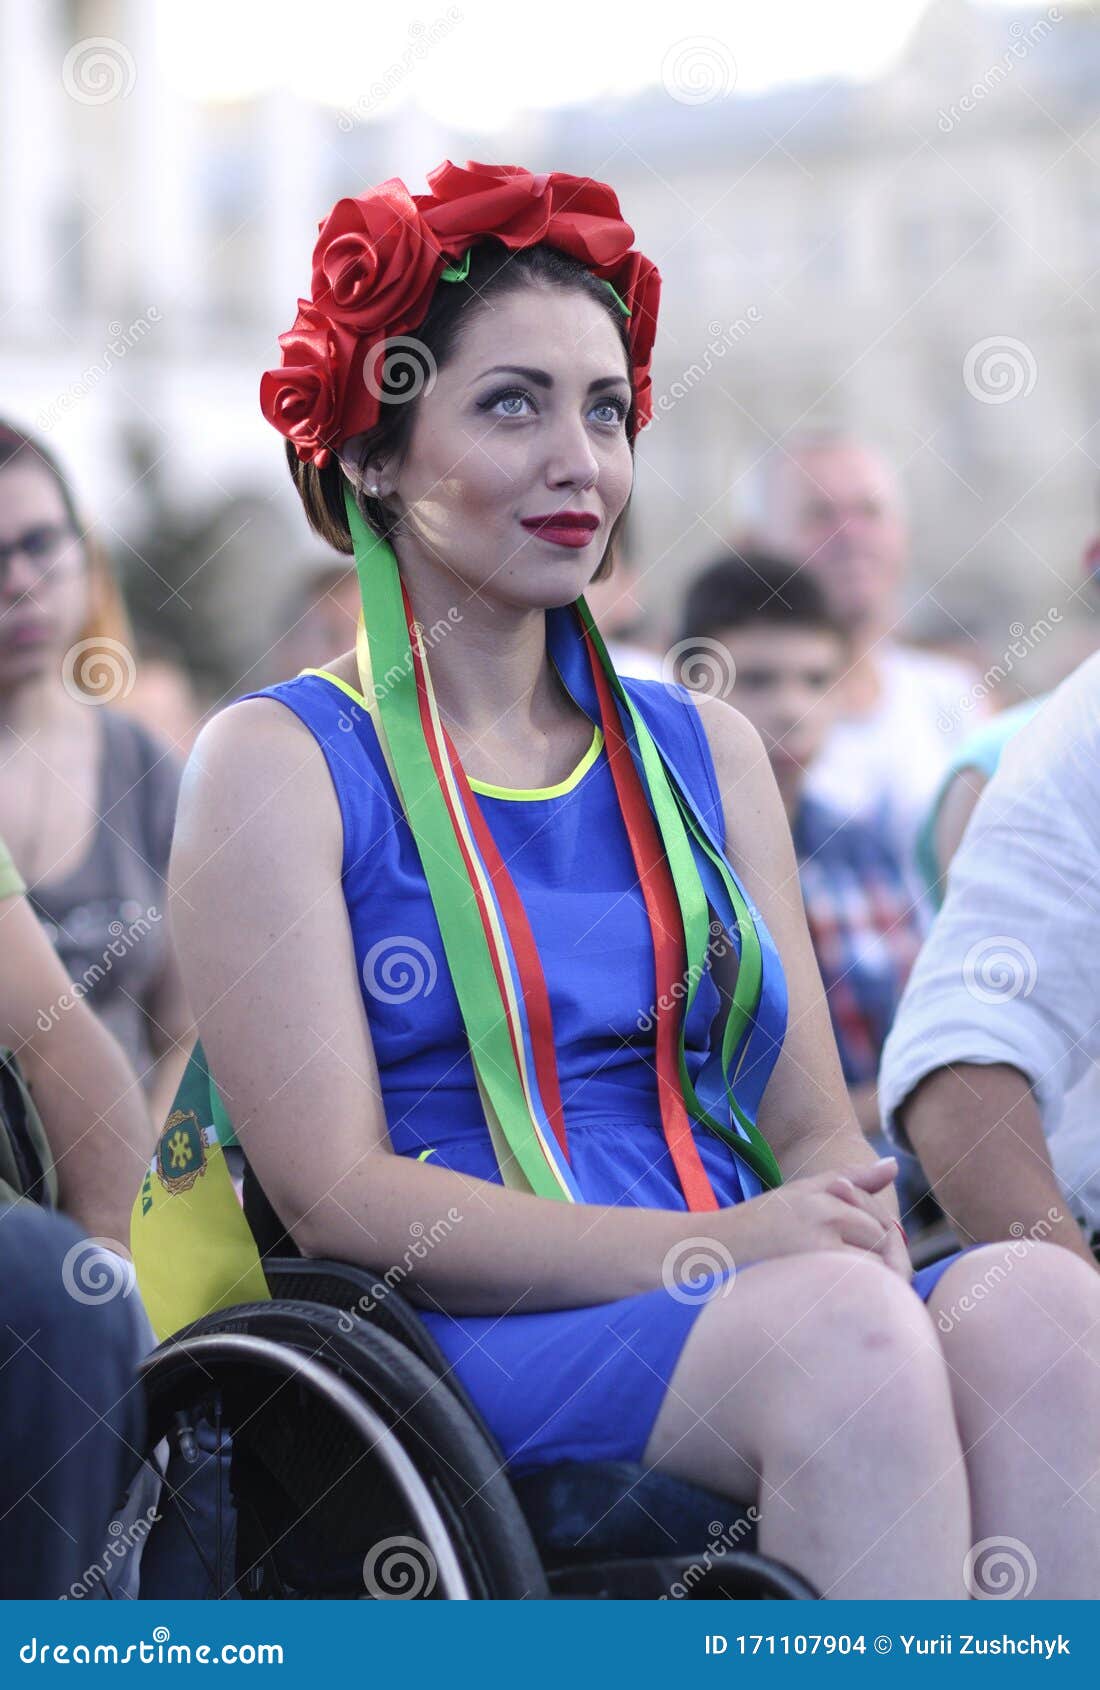 https://thumbs.dreamstime.com/z/disabled-beautiful-woman-ukrainian-native-red-circlet-flowers-sitting-wheelchair-disabled-woman-ukrainian-native-red-171107904.jpg